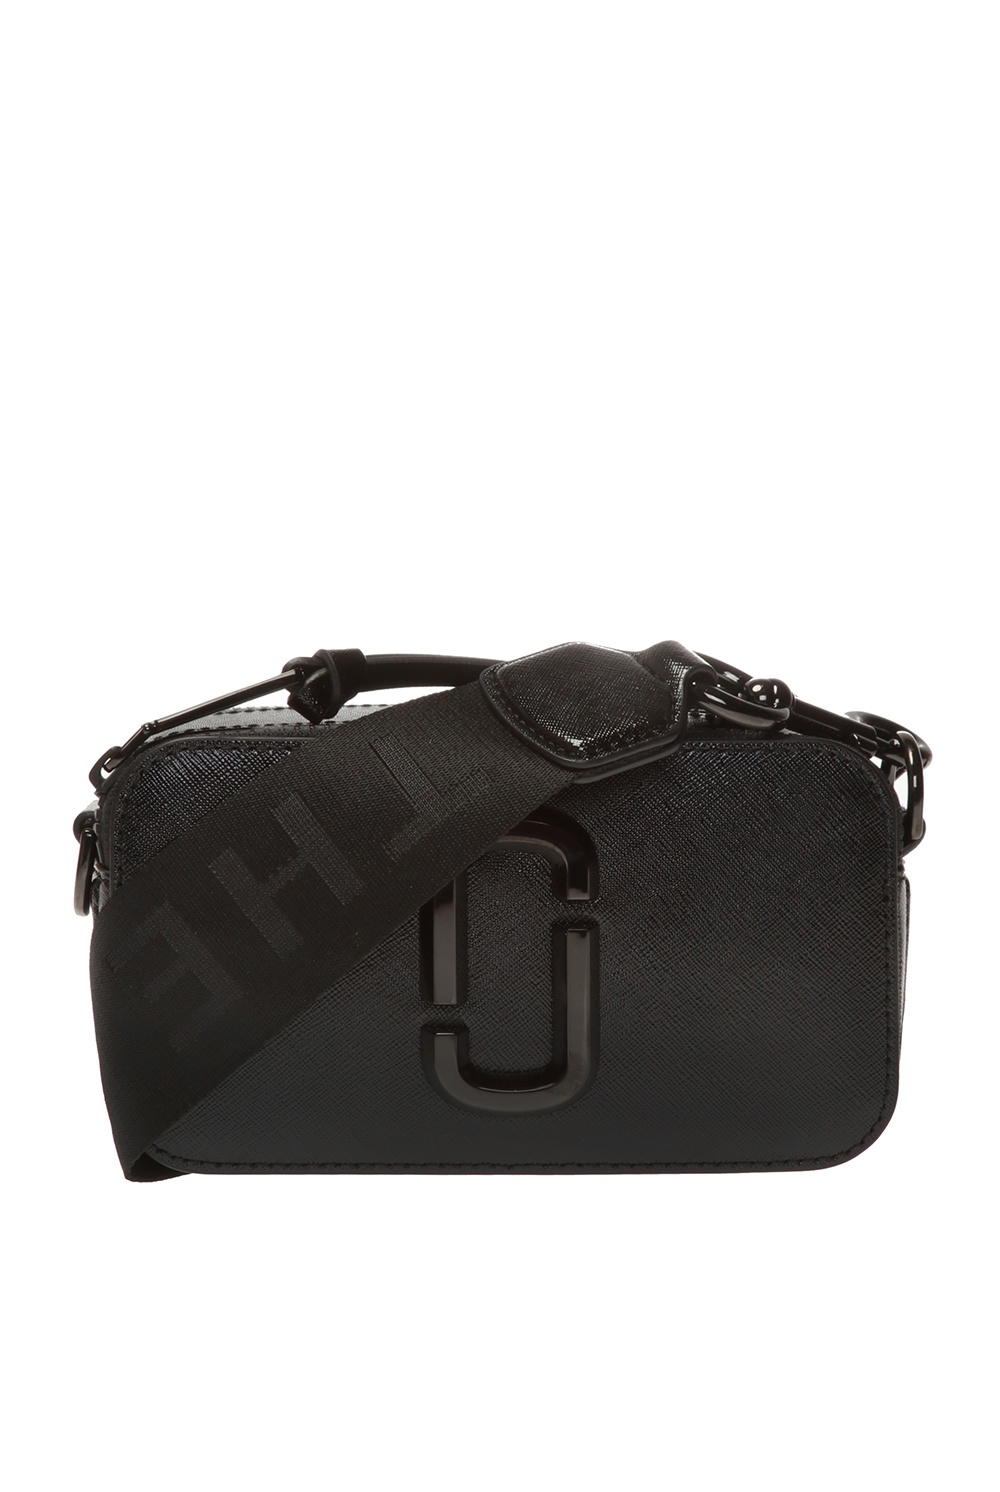 Cross body bags Marc Jacobs - Snapshot leather crossbody bag -  M0014867SNAPSHOT001